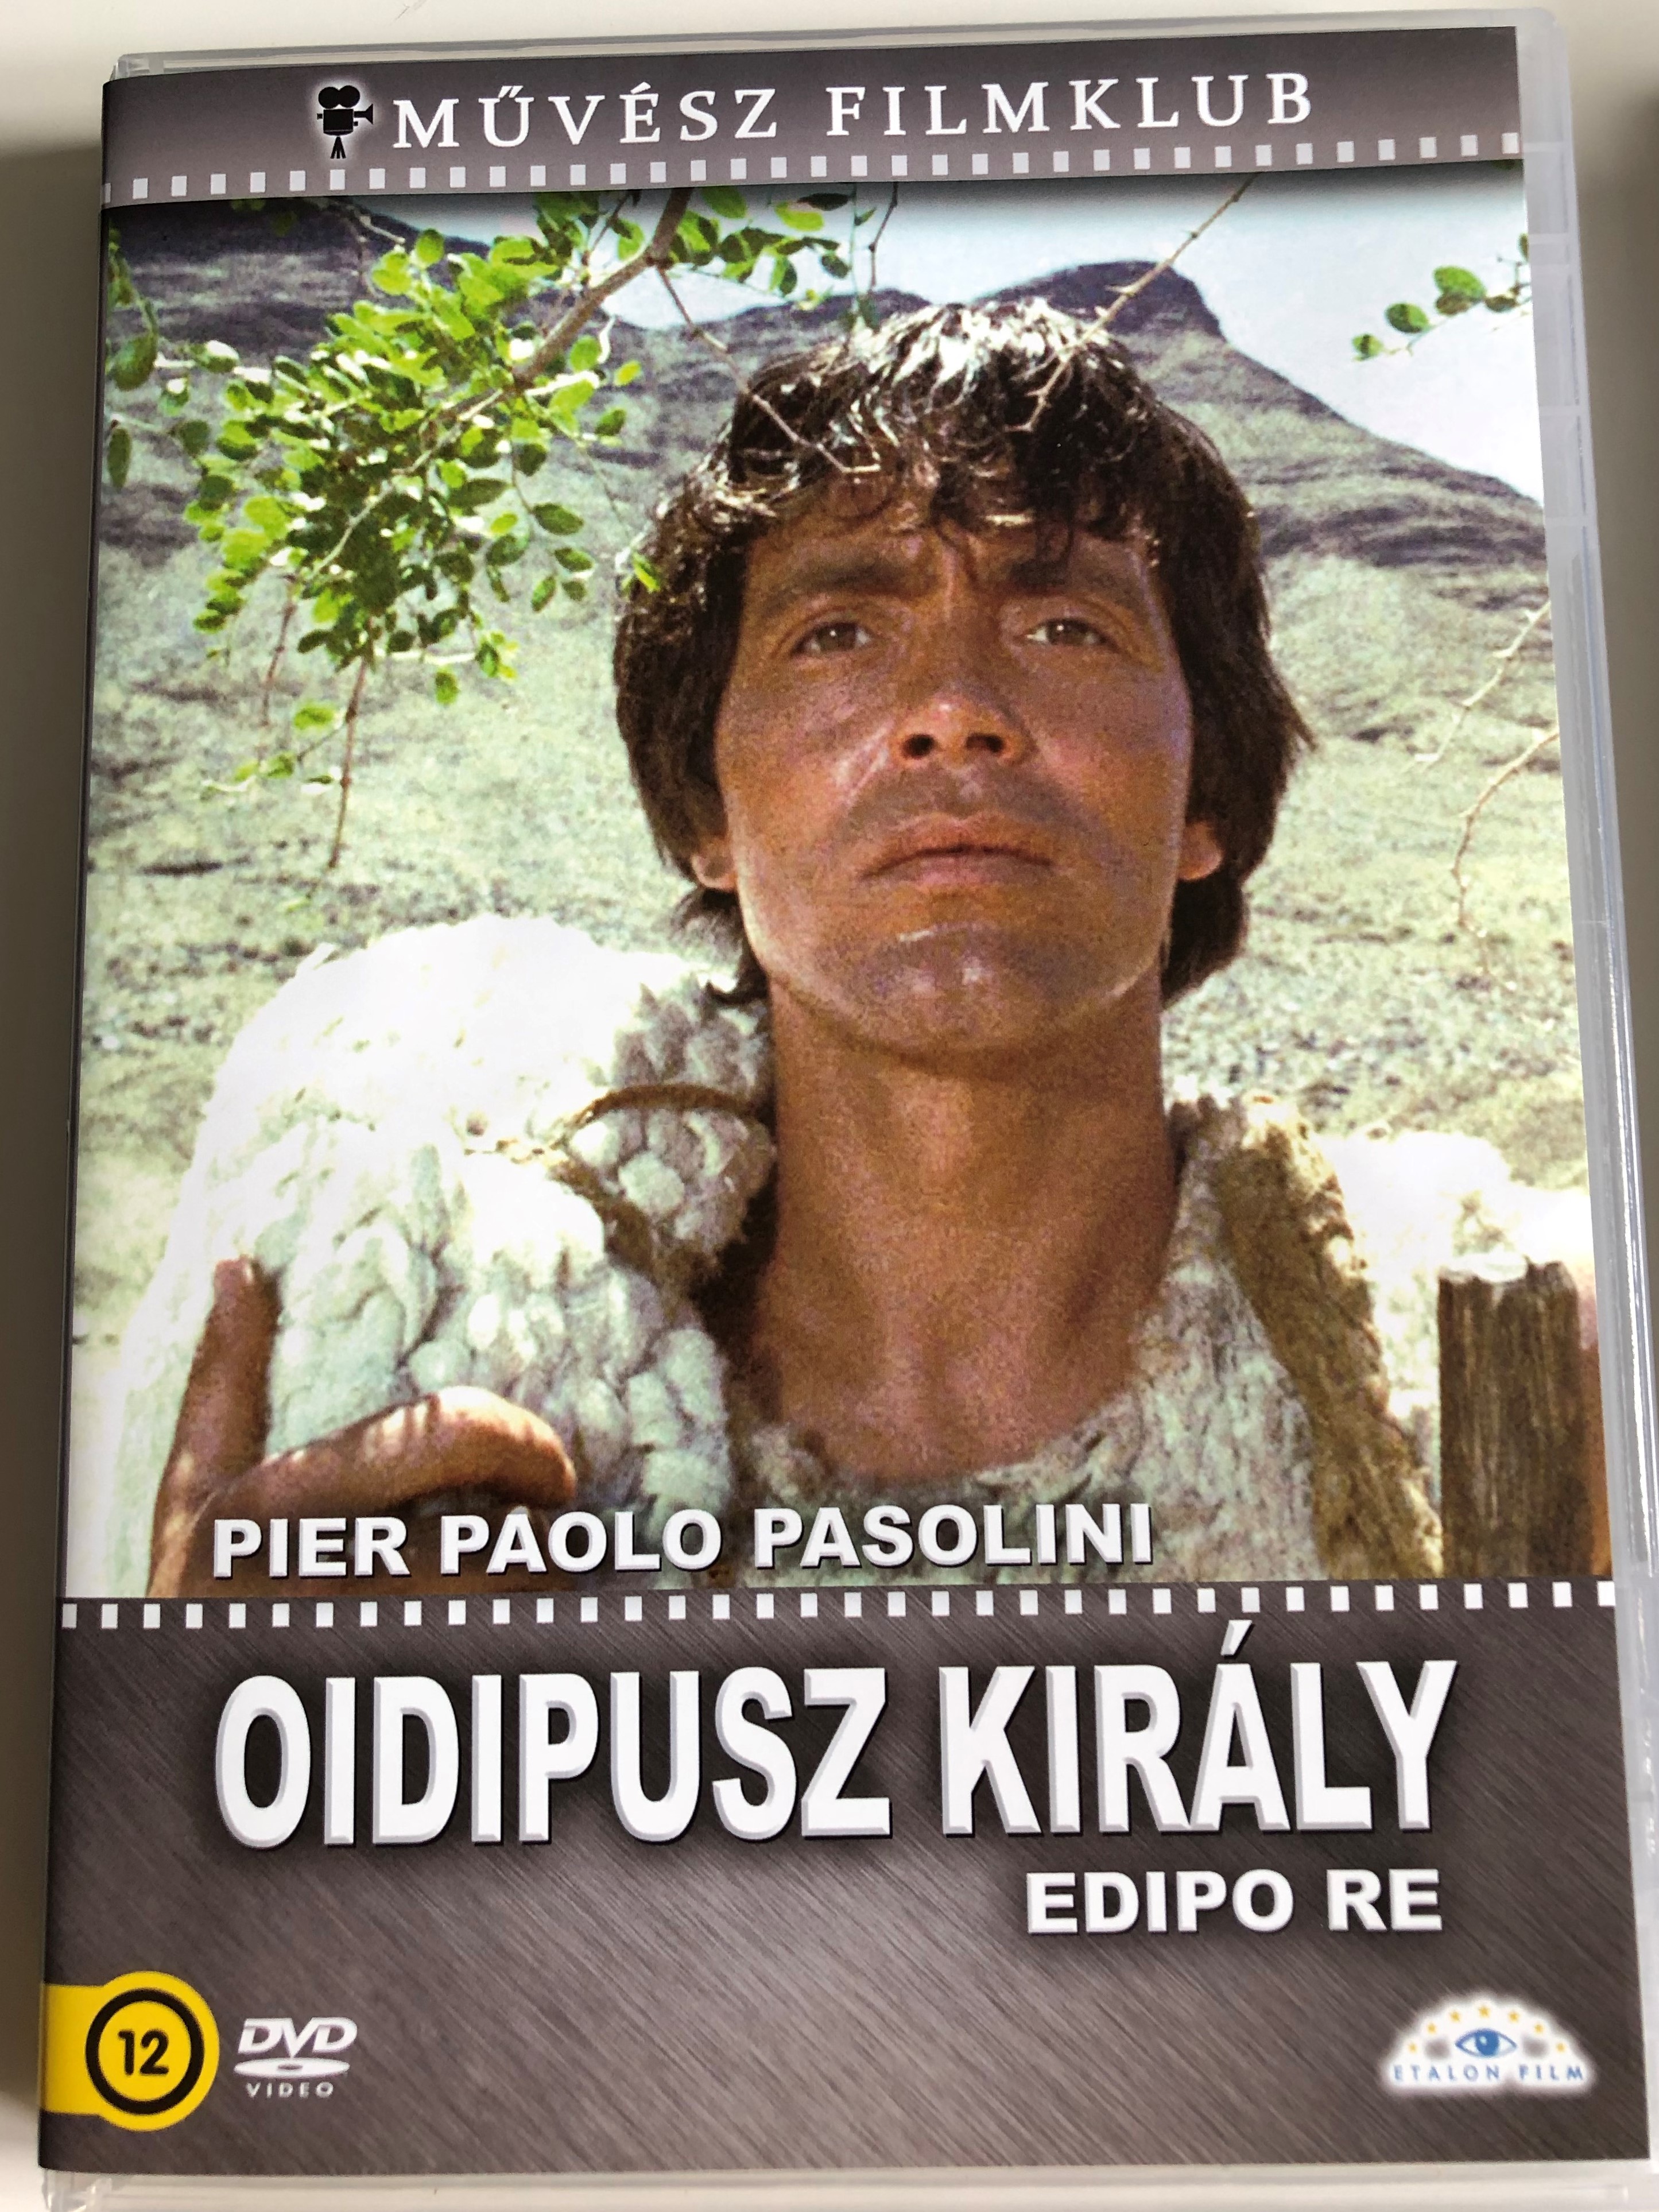 edipo-re-dvd-1967-oidipusz-kir-ly-oedipus-rex-directed-by-pier-paolo-pasolini-starring-silvana-mangano-franco-citti-alida-valli-carmelo-bene-julian-beck-luciano-bartoli-francesco-leonetti-1-.jpg